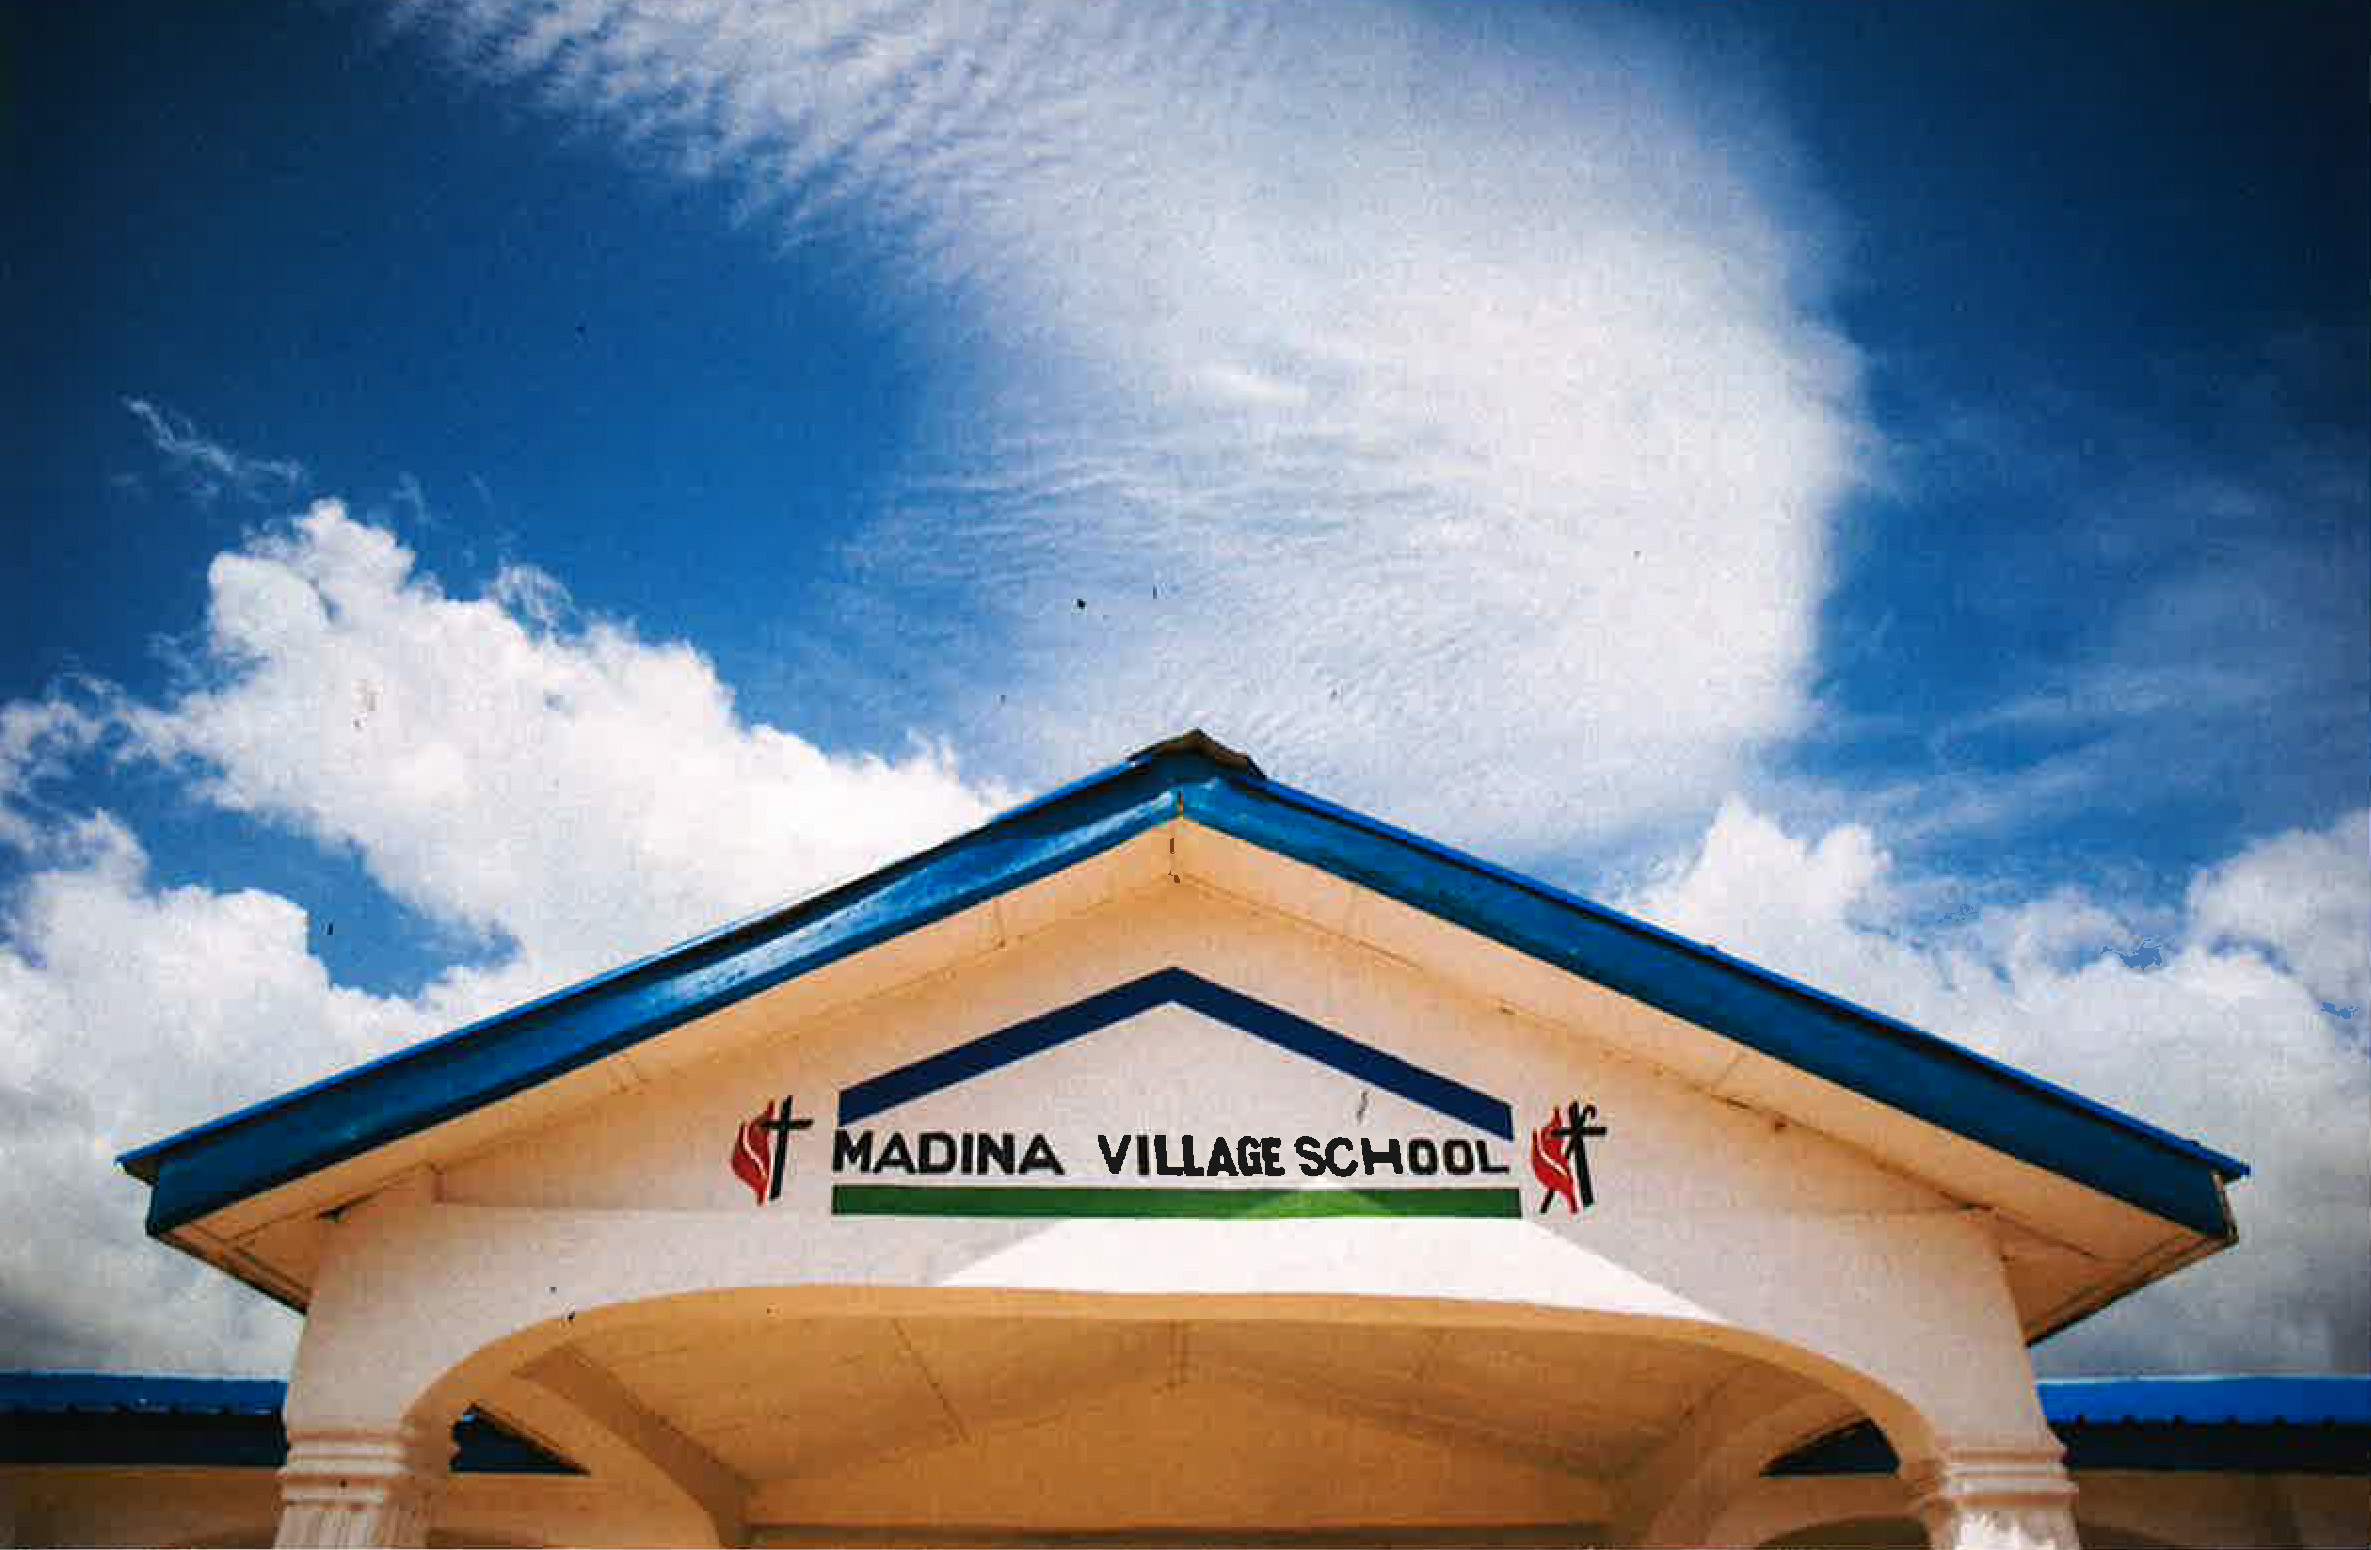 The Madina Village School building.